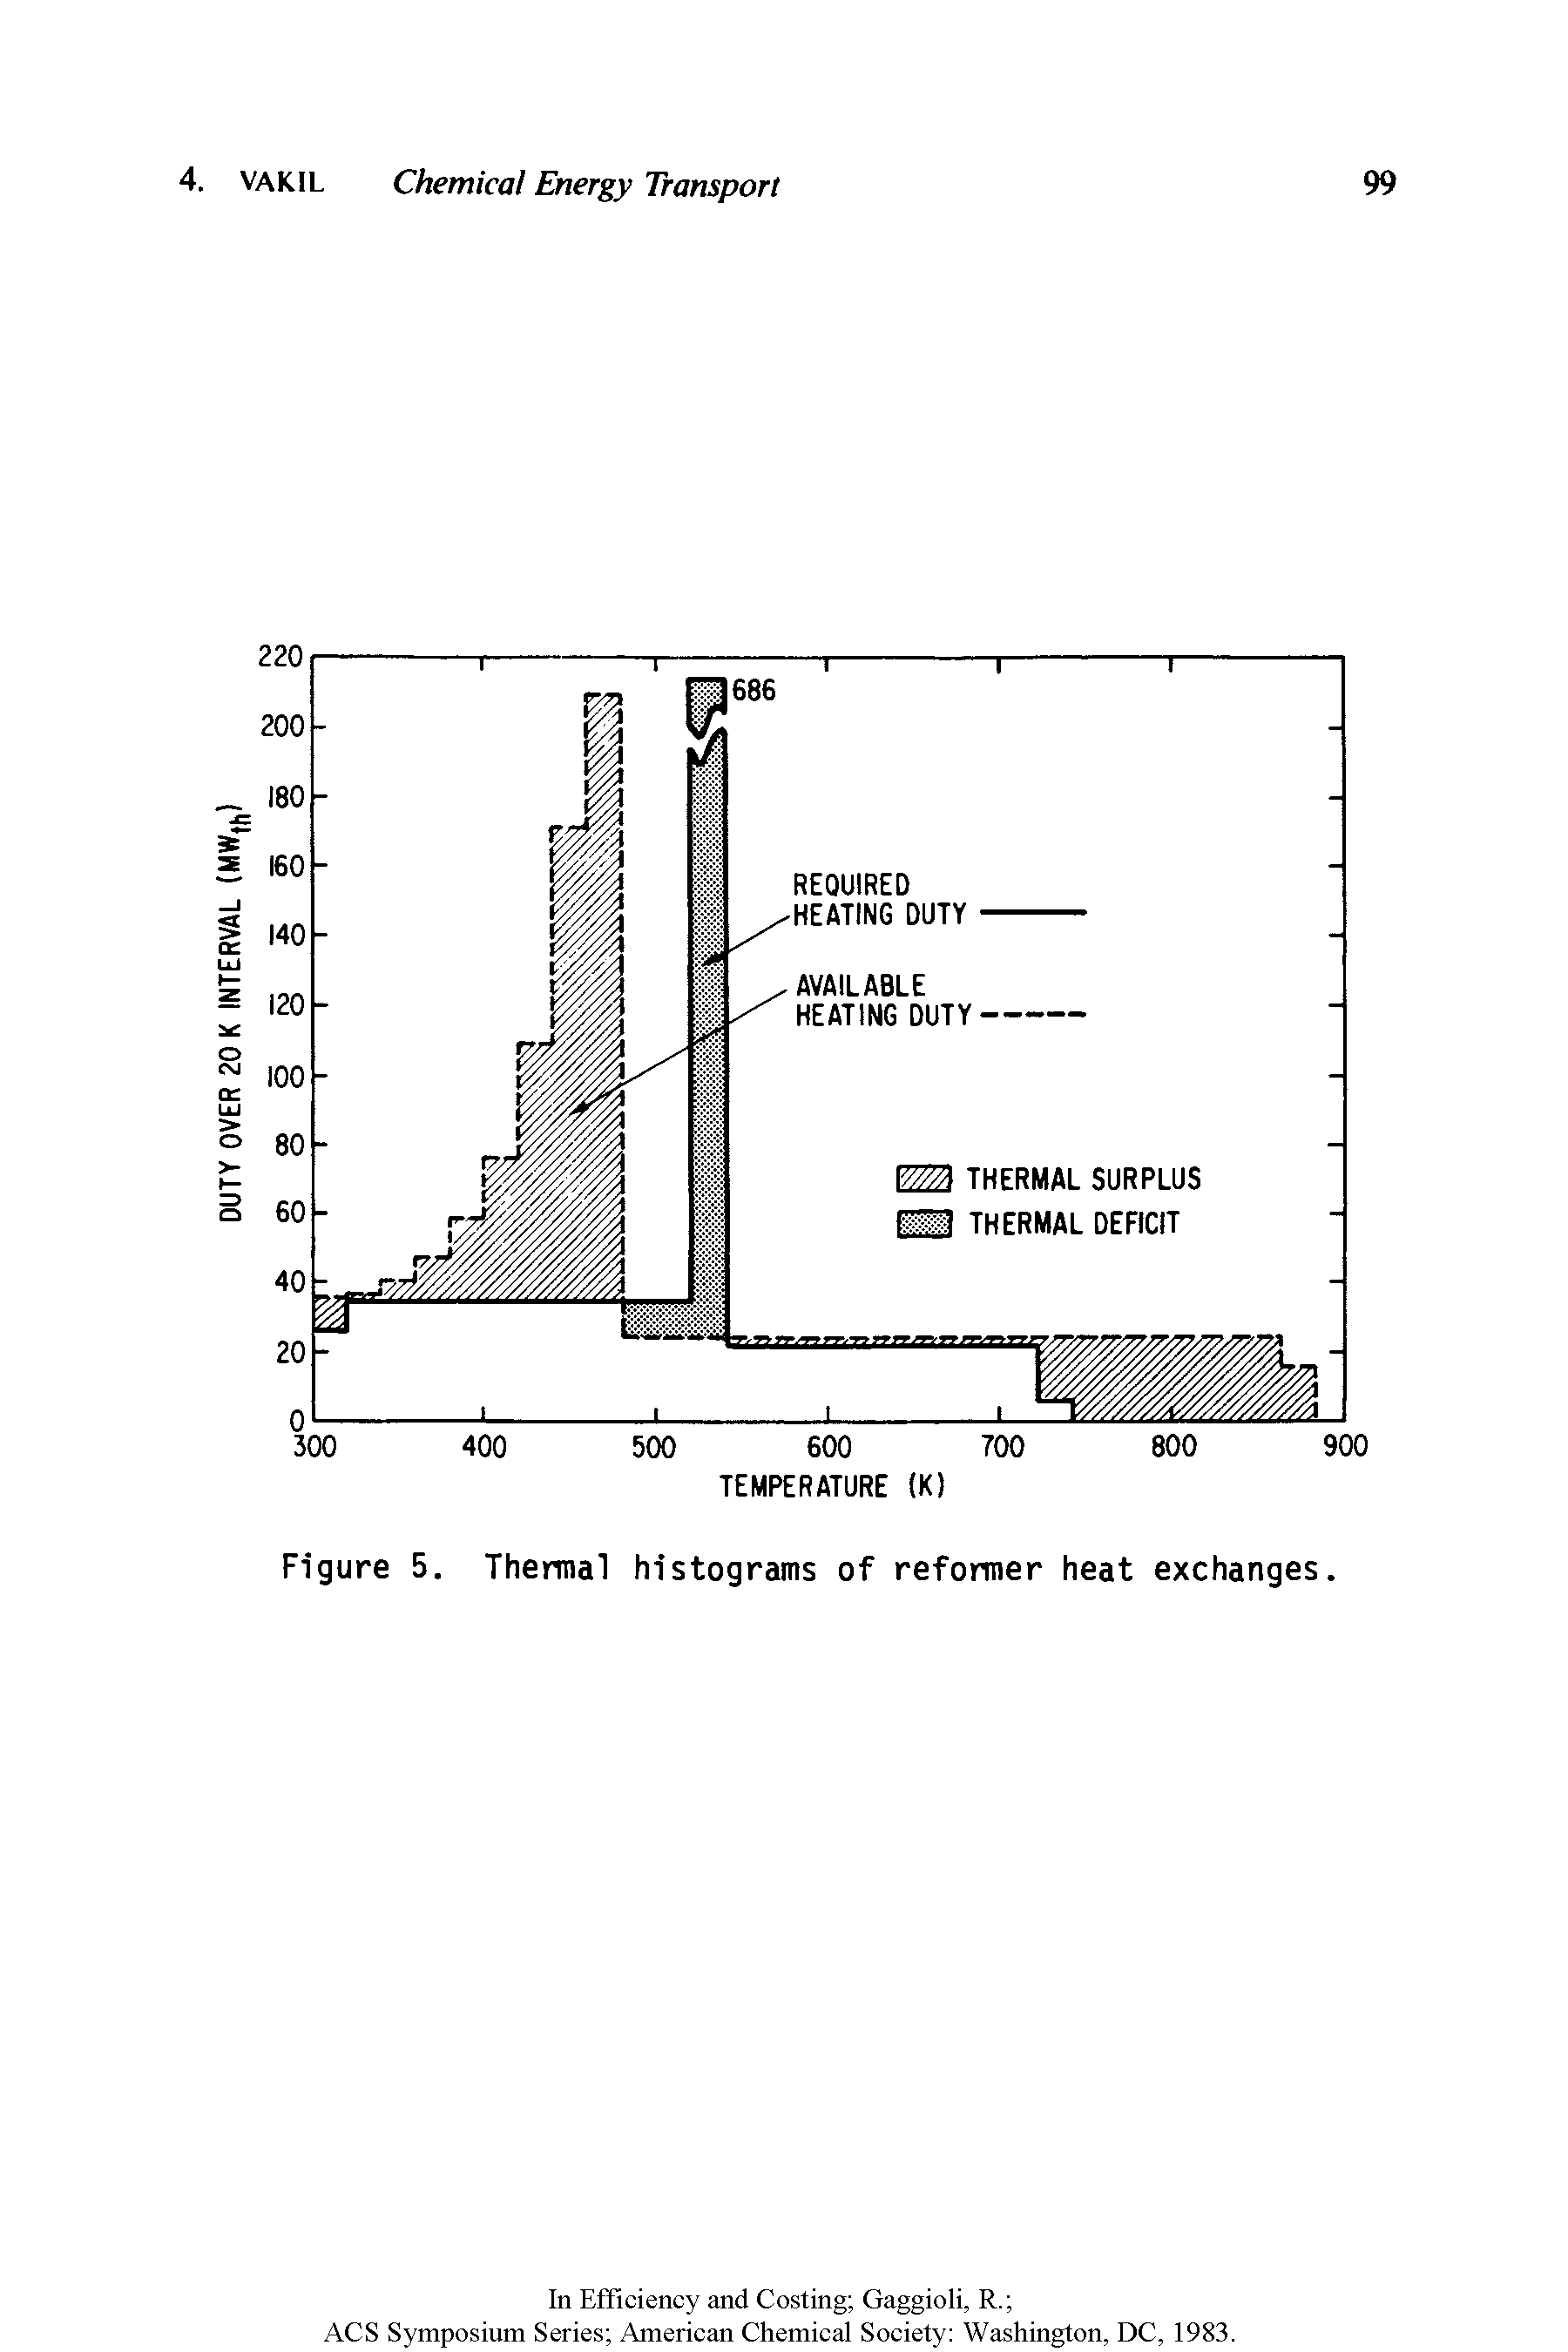 Figure 5. Thermal histograms of reformer heat exchanges.